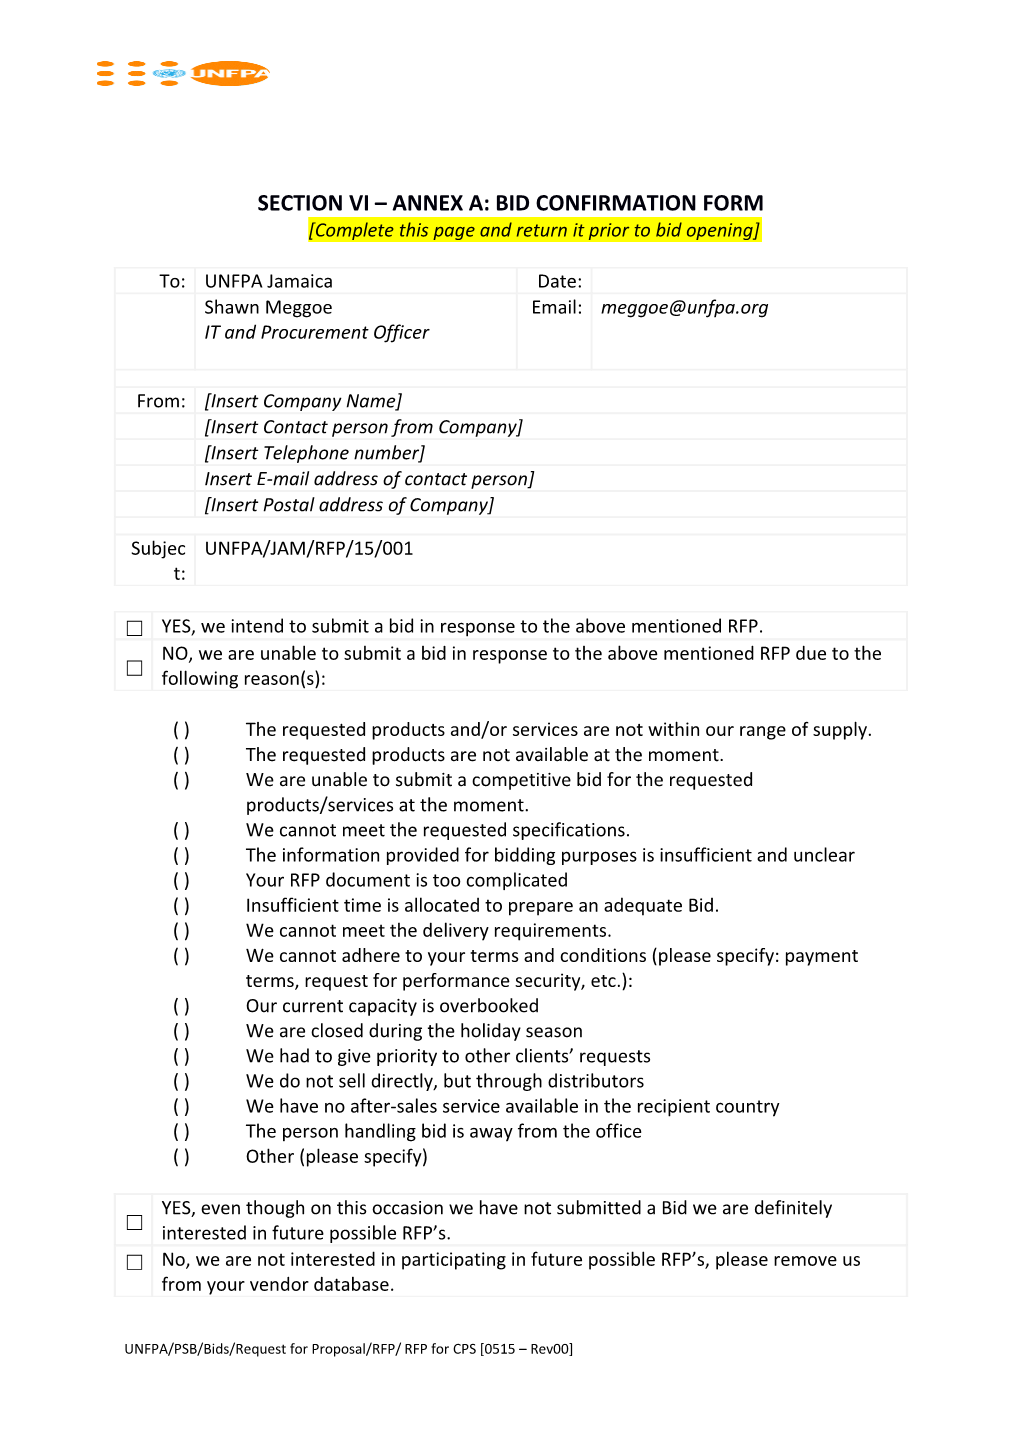 Section VI ANNEX A: Bid Confirmation Form